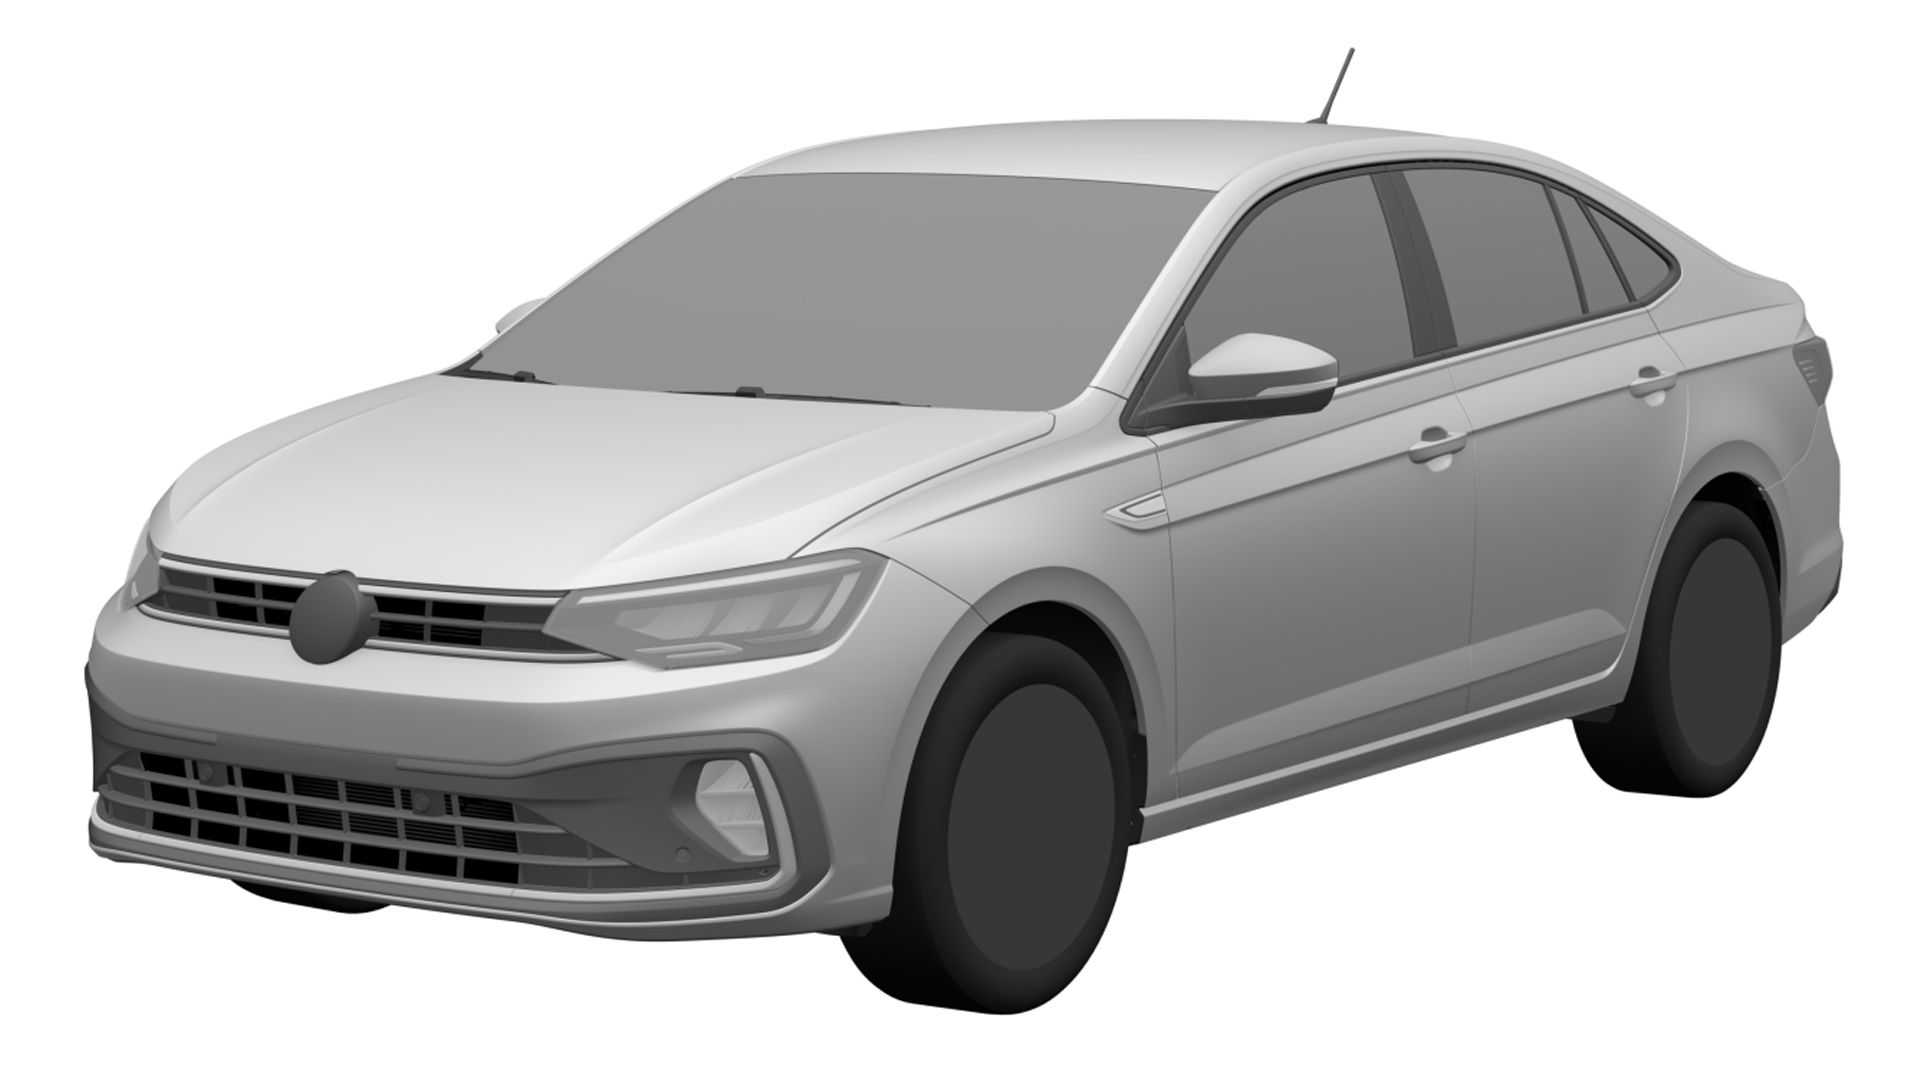 Carros na Web, Volkswagen Virtus 1.6 2018